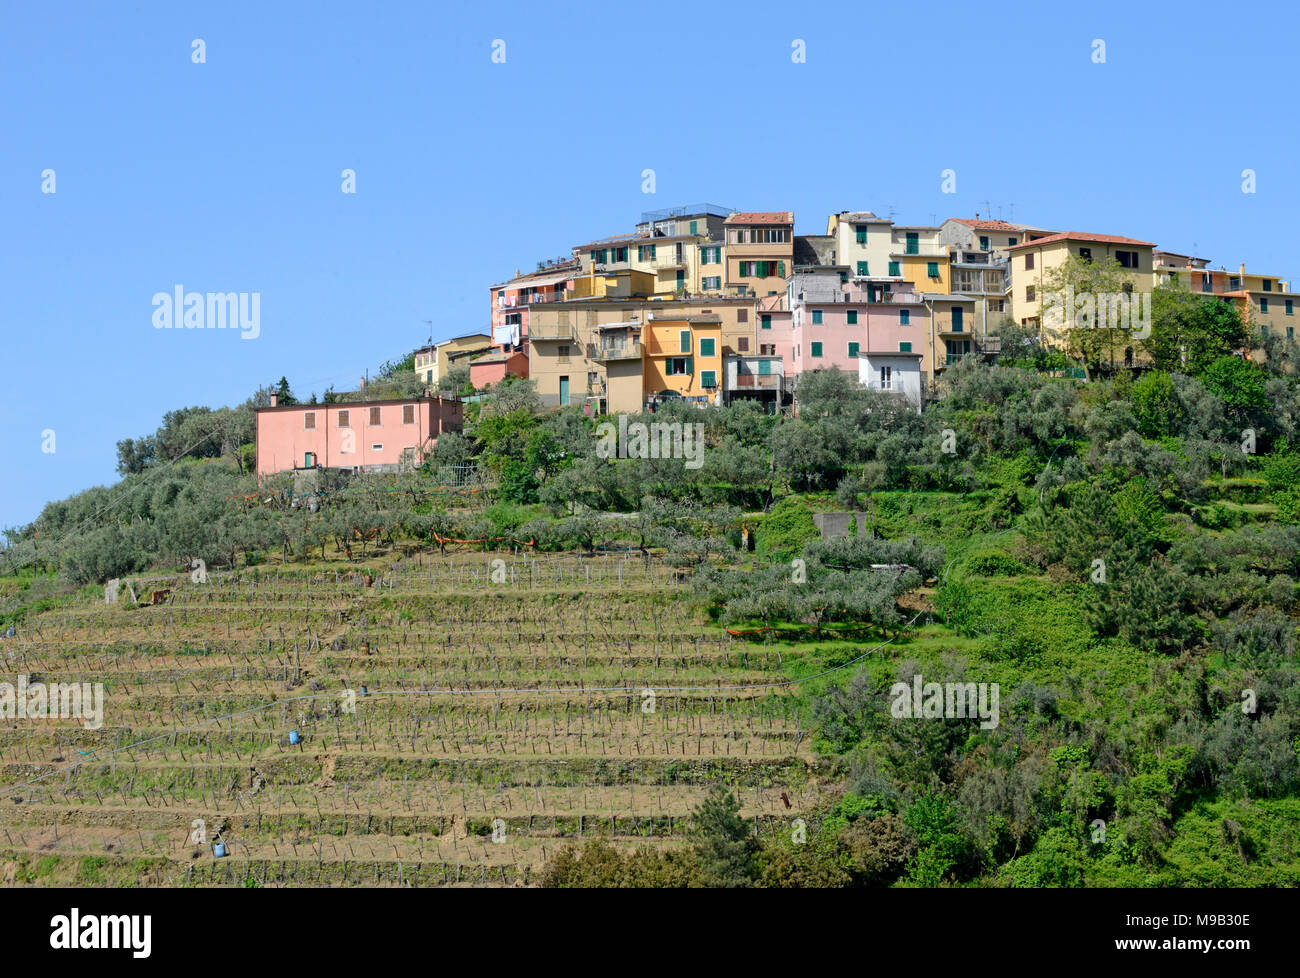 Vineyard, wine growing at Volastra, UNESCO world heritage site, Cinque Terre, Liguria di Levante, Italy, Mediterranean sea, Europe Stock Photo